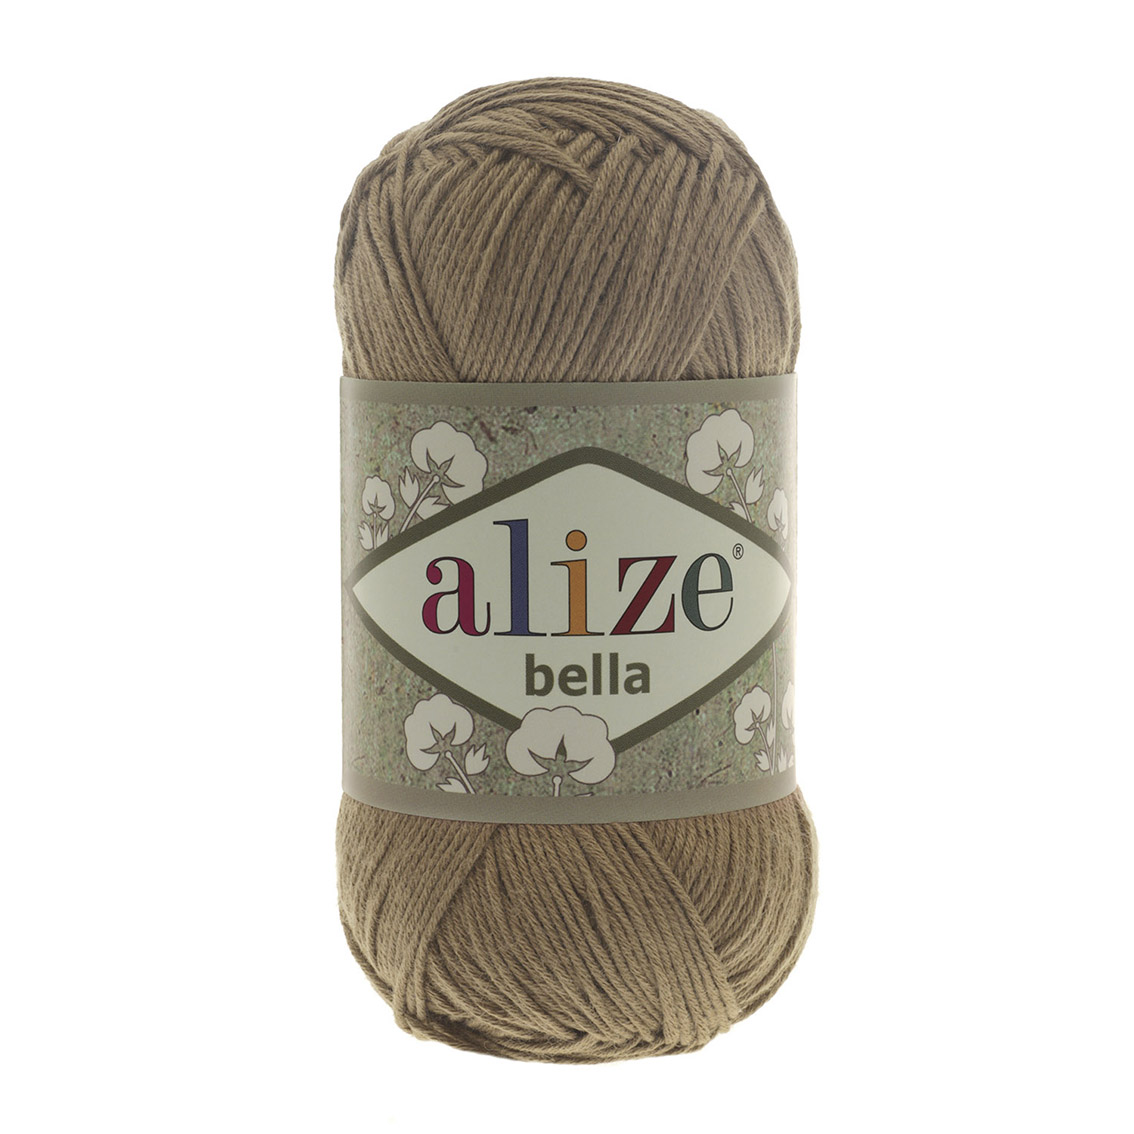 ALIZE/BELLA (COT YARN:50GRx5BL(250GRM)) - 466